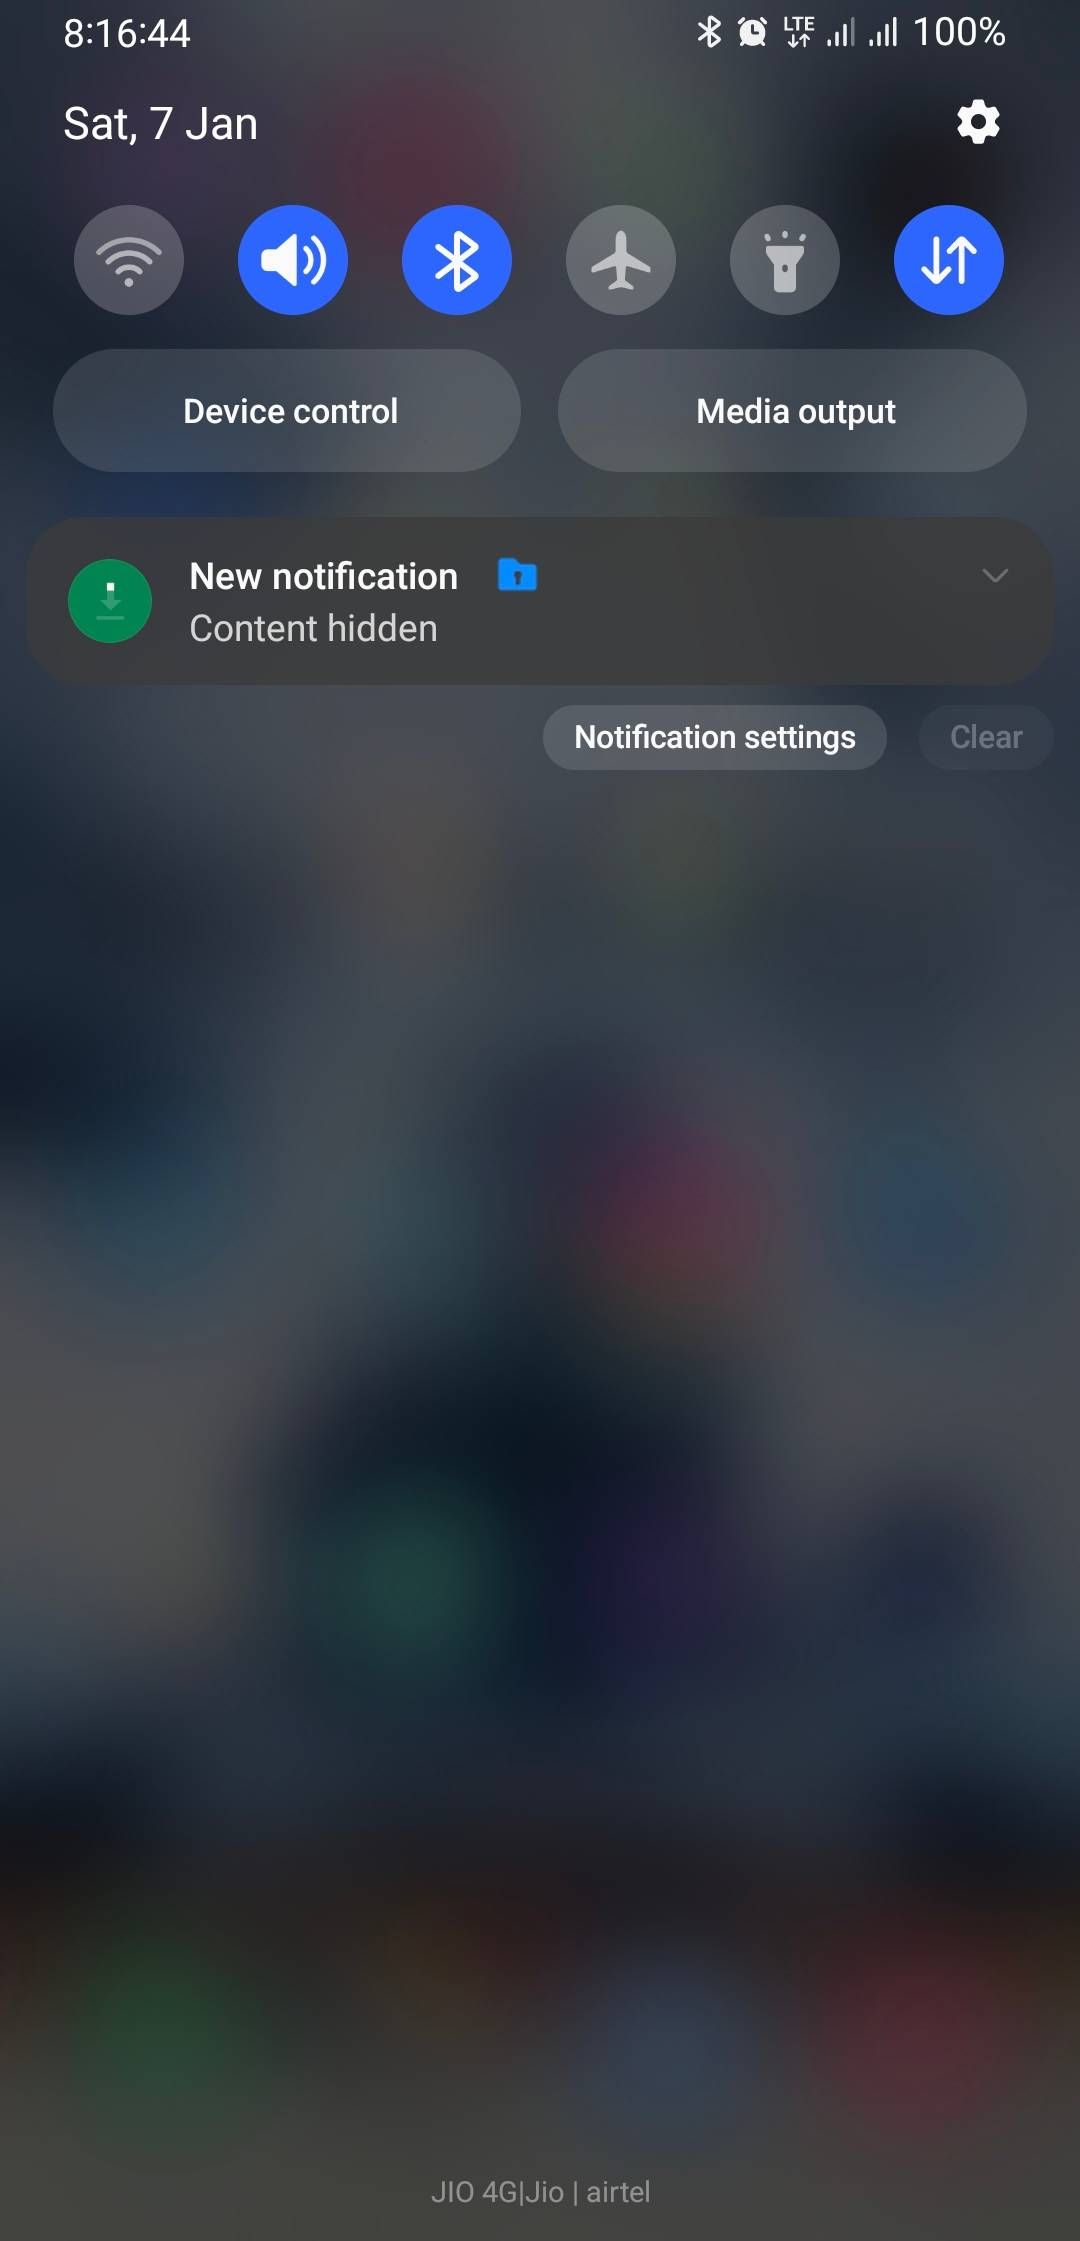 Solved: New notification contents hidden - Samsung Members